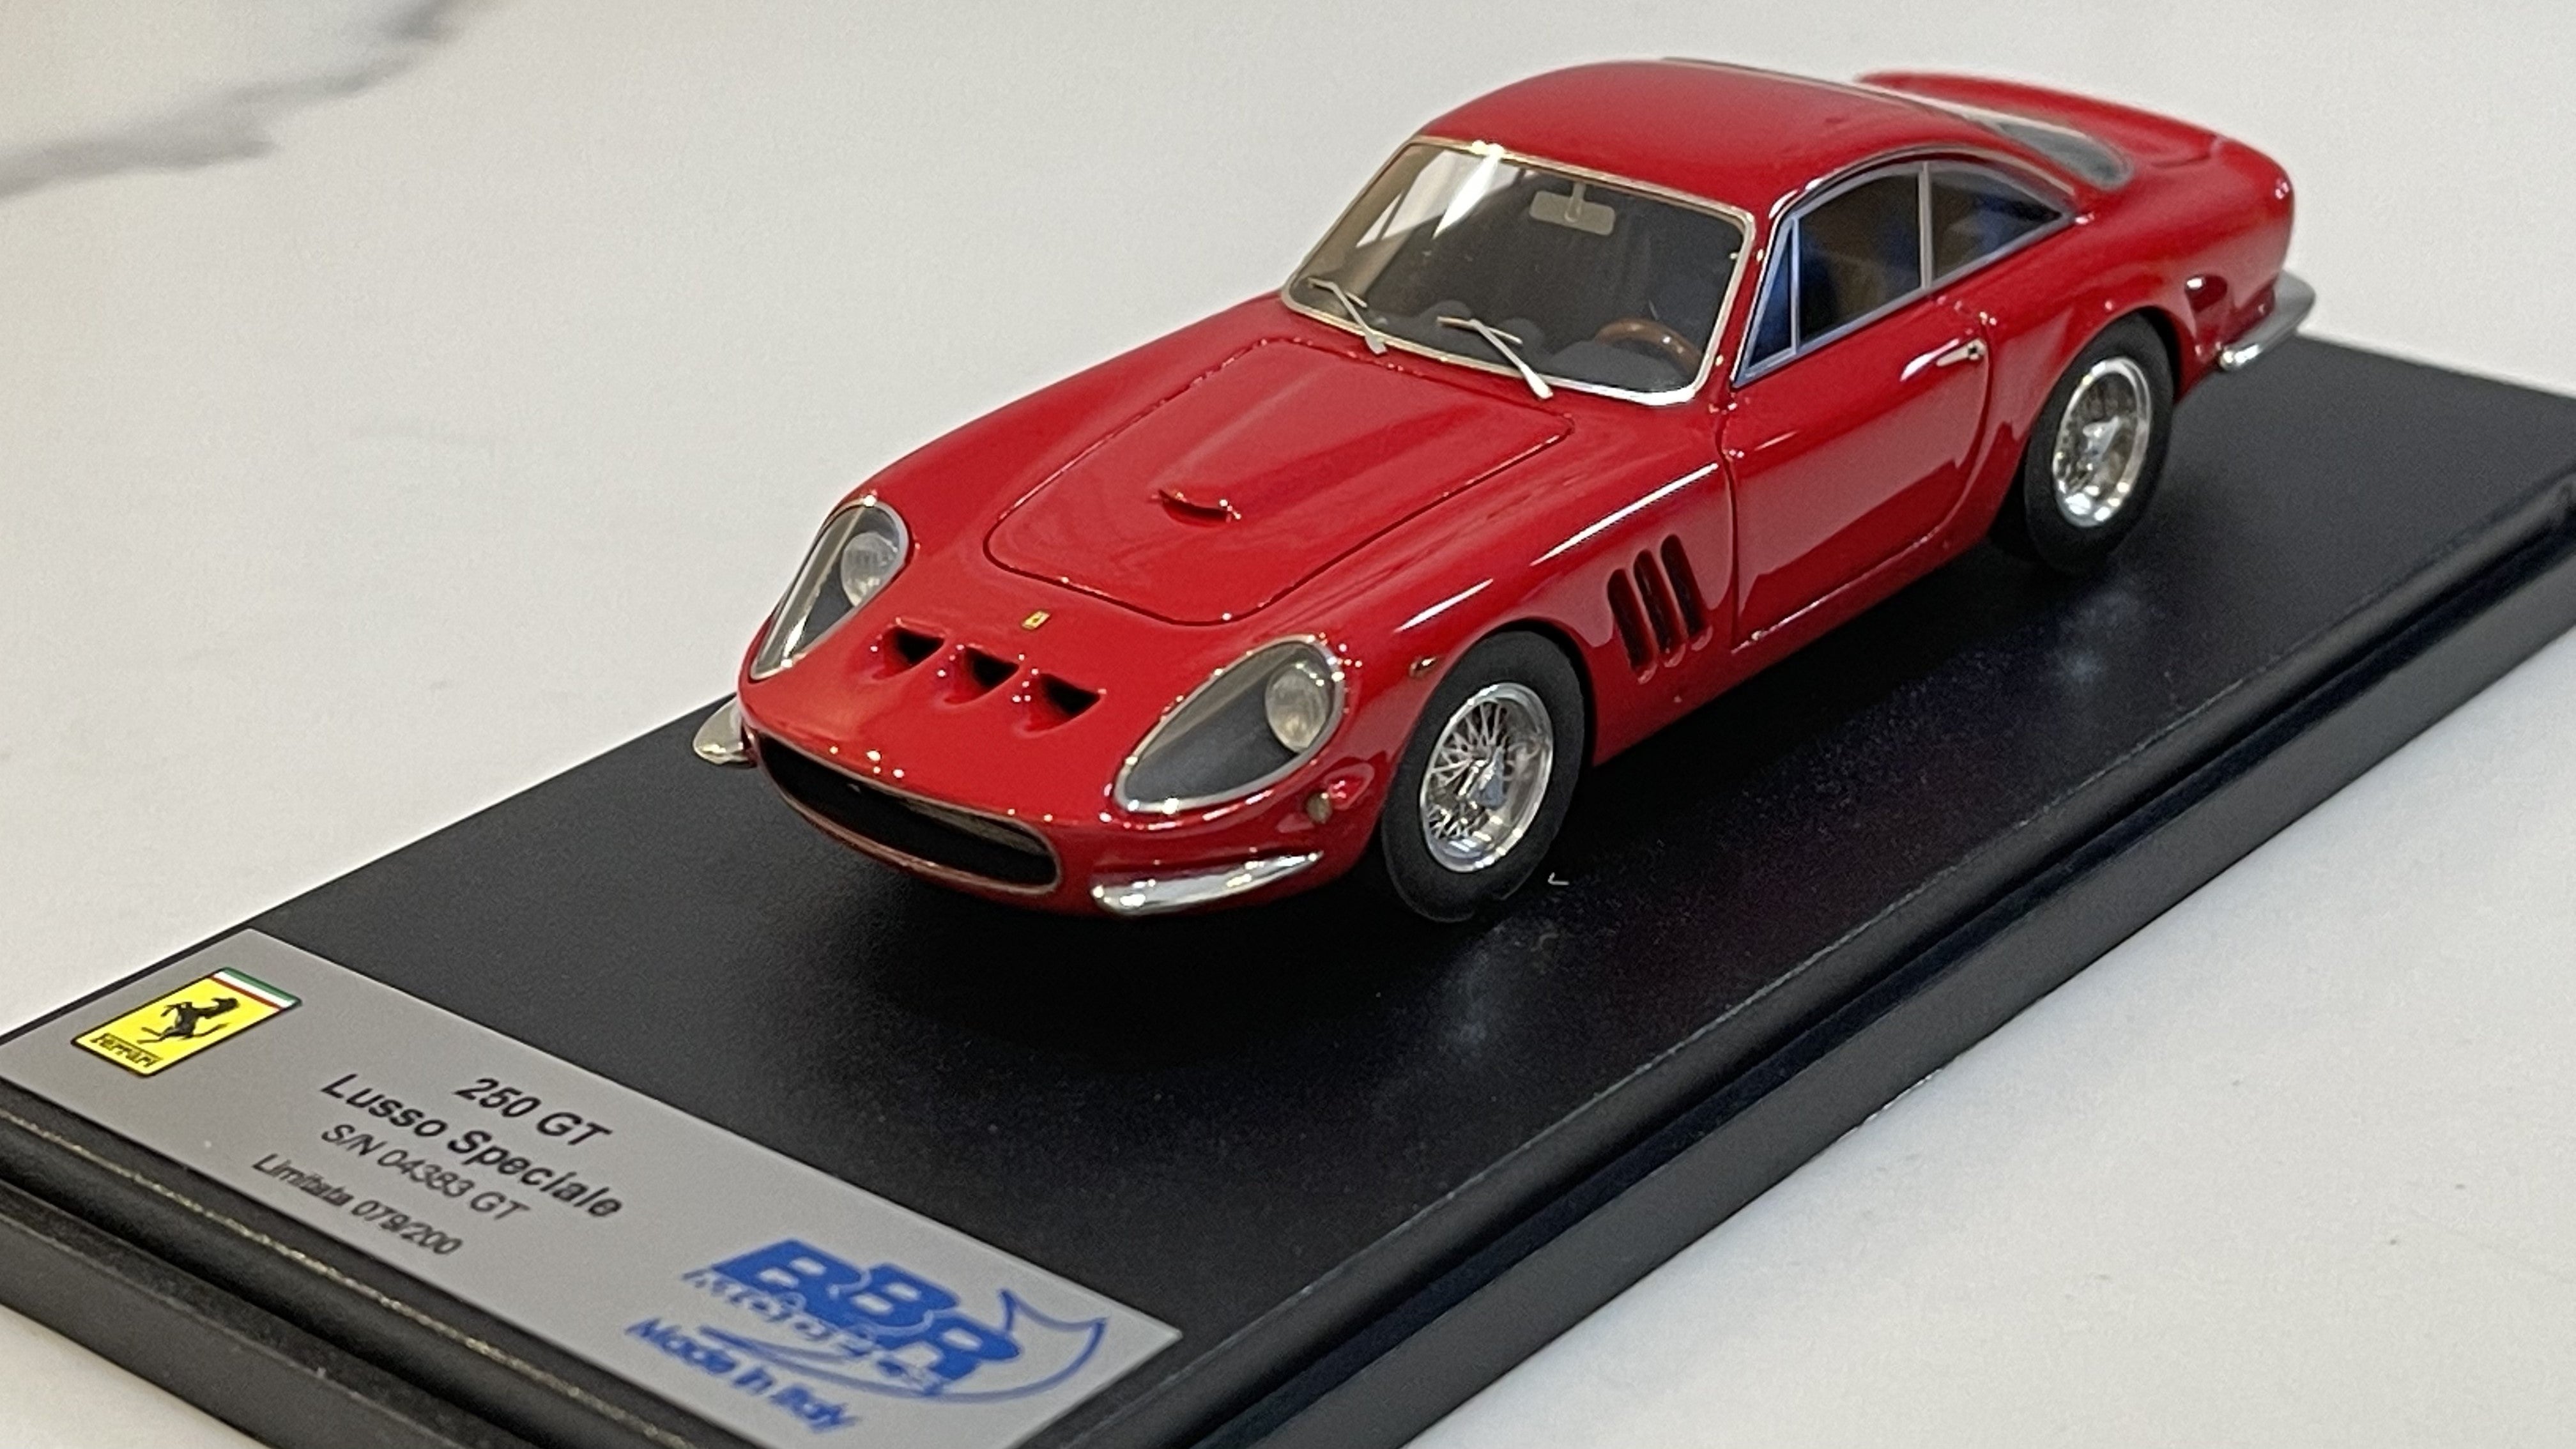 BBR 1/43 Ferrari 250 GT Lusso Speciale Fantuzzi 04383GT 1963 Red 